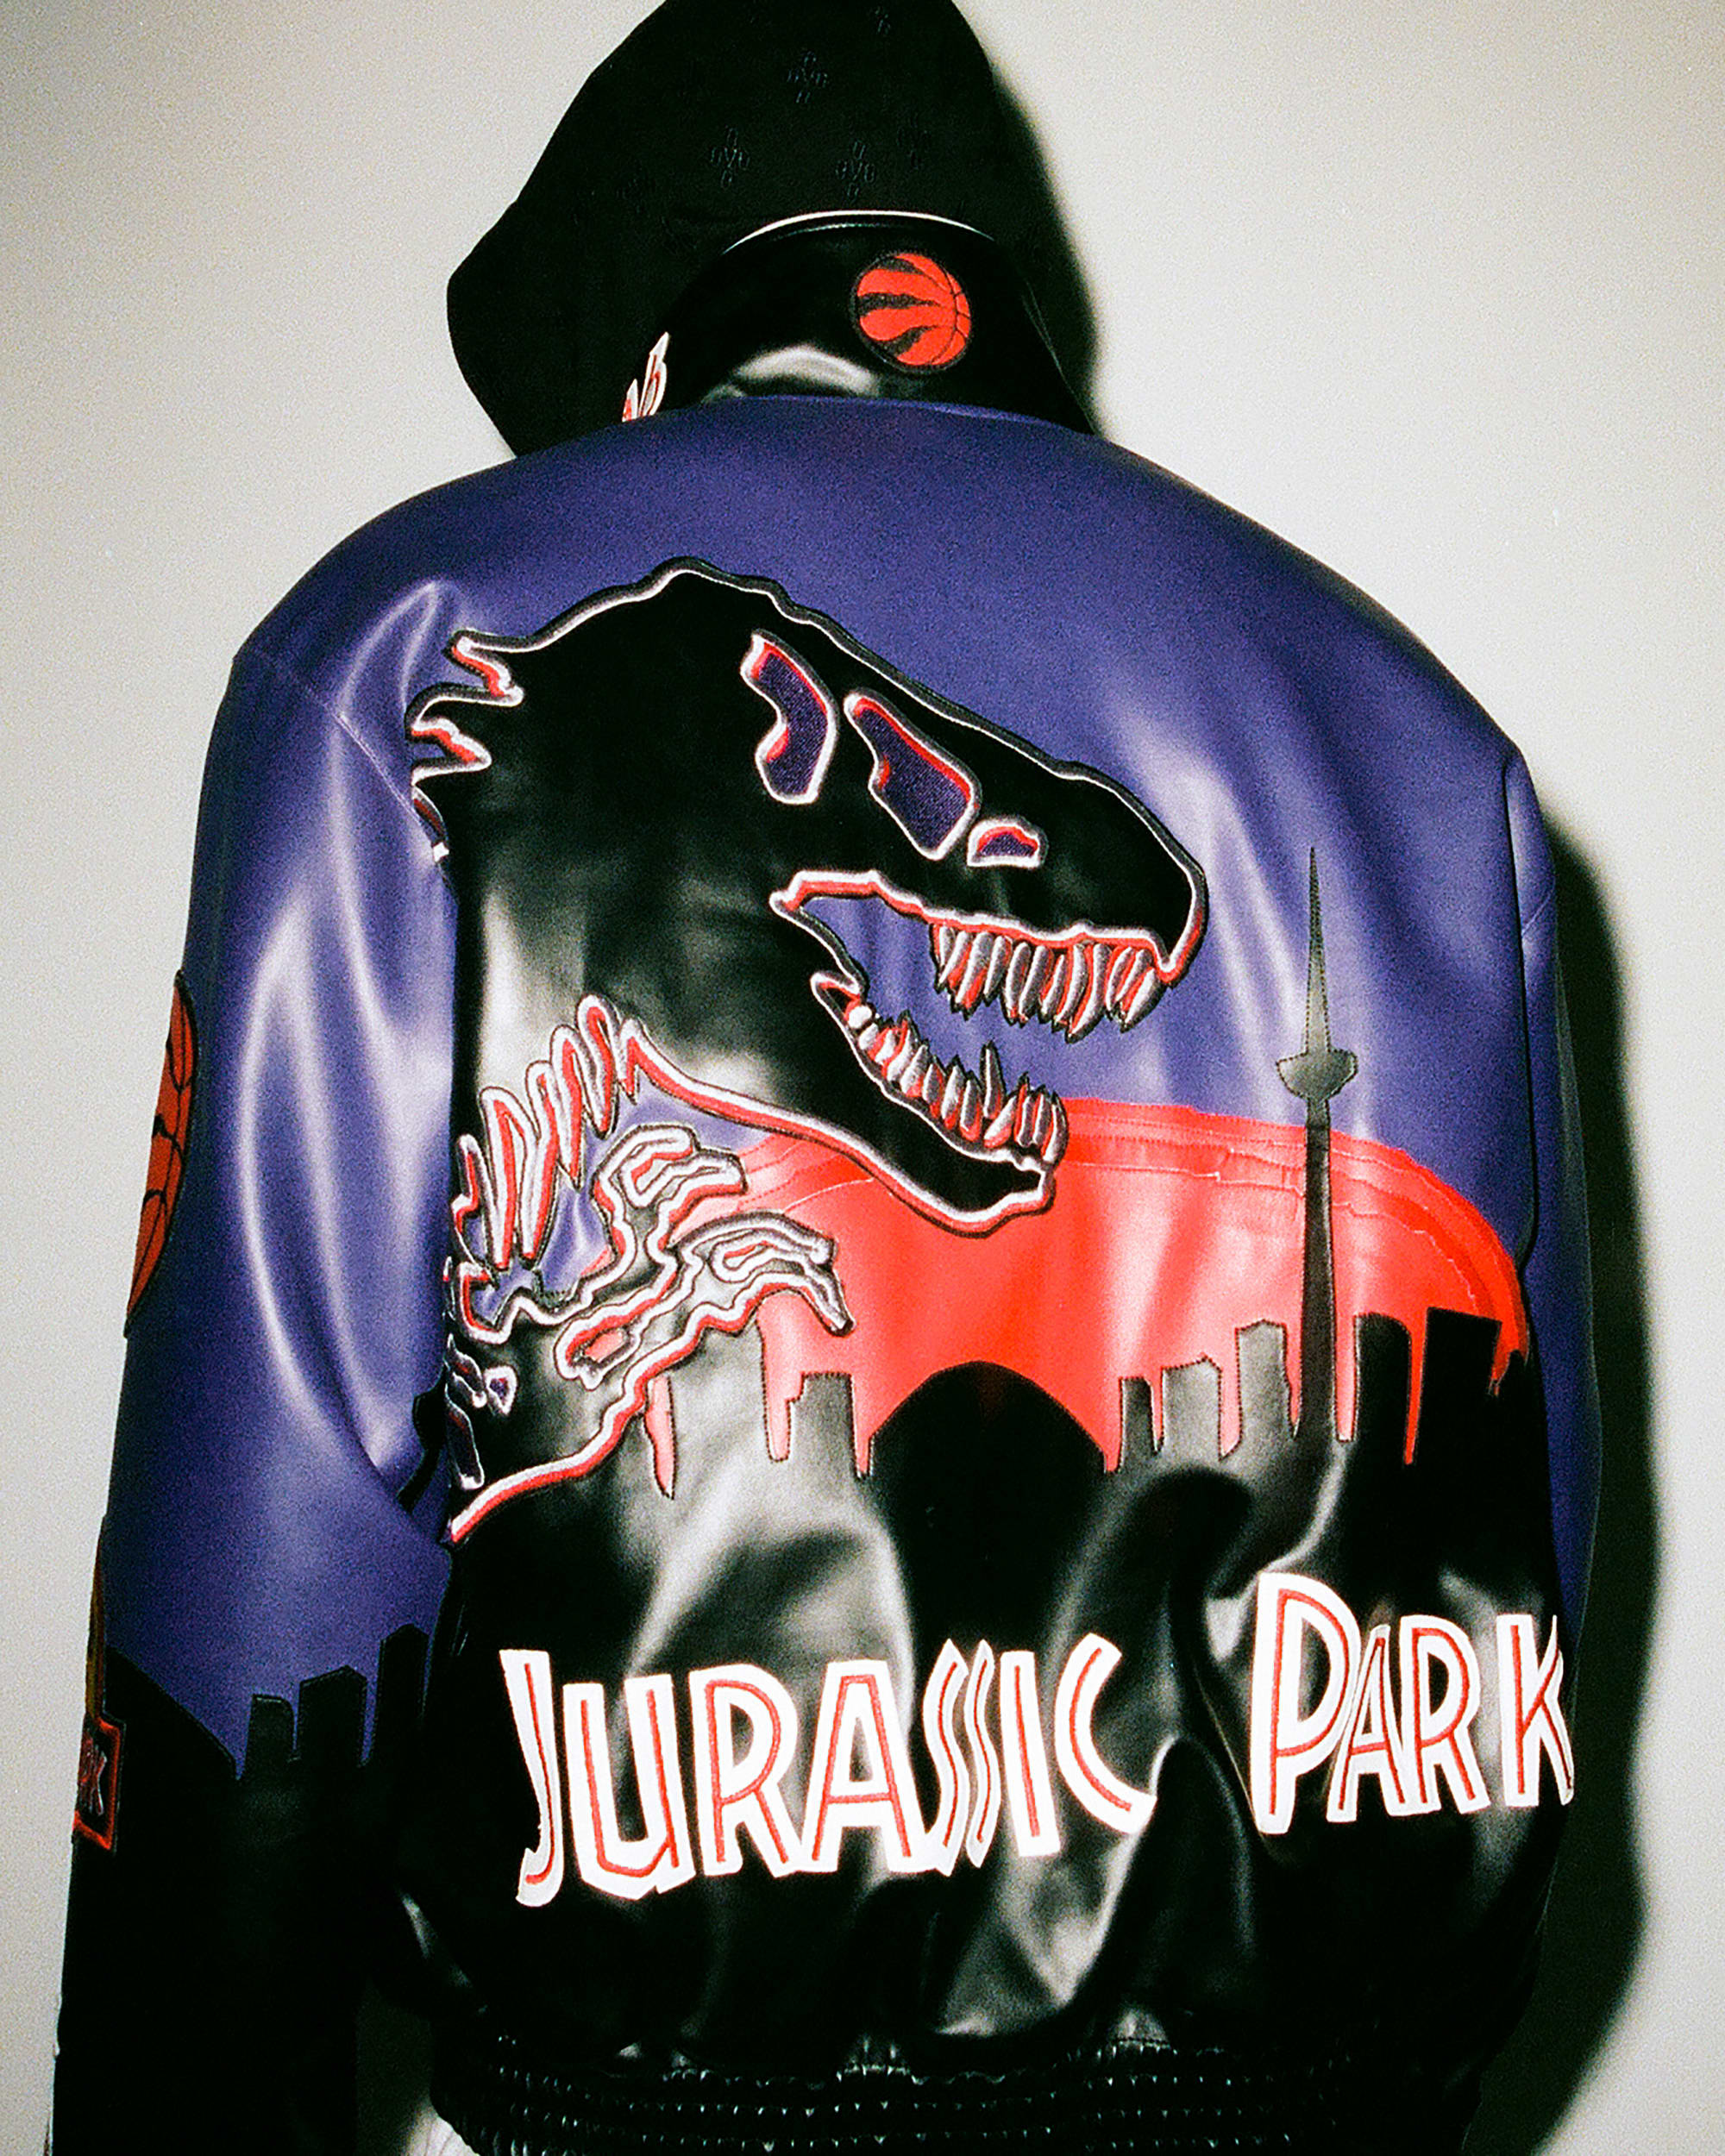 The OVO x Toronto Raptors Jurassic Park jacket